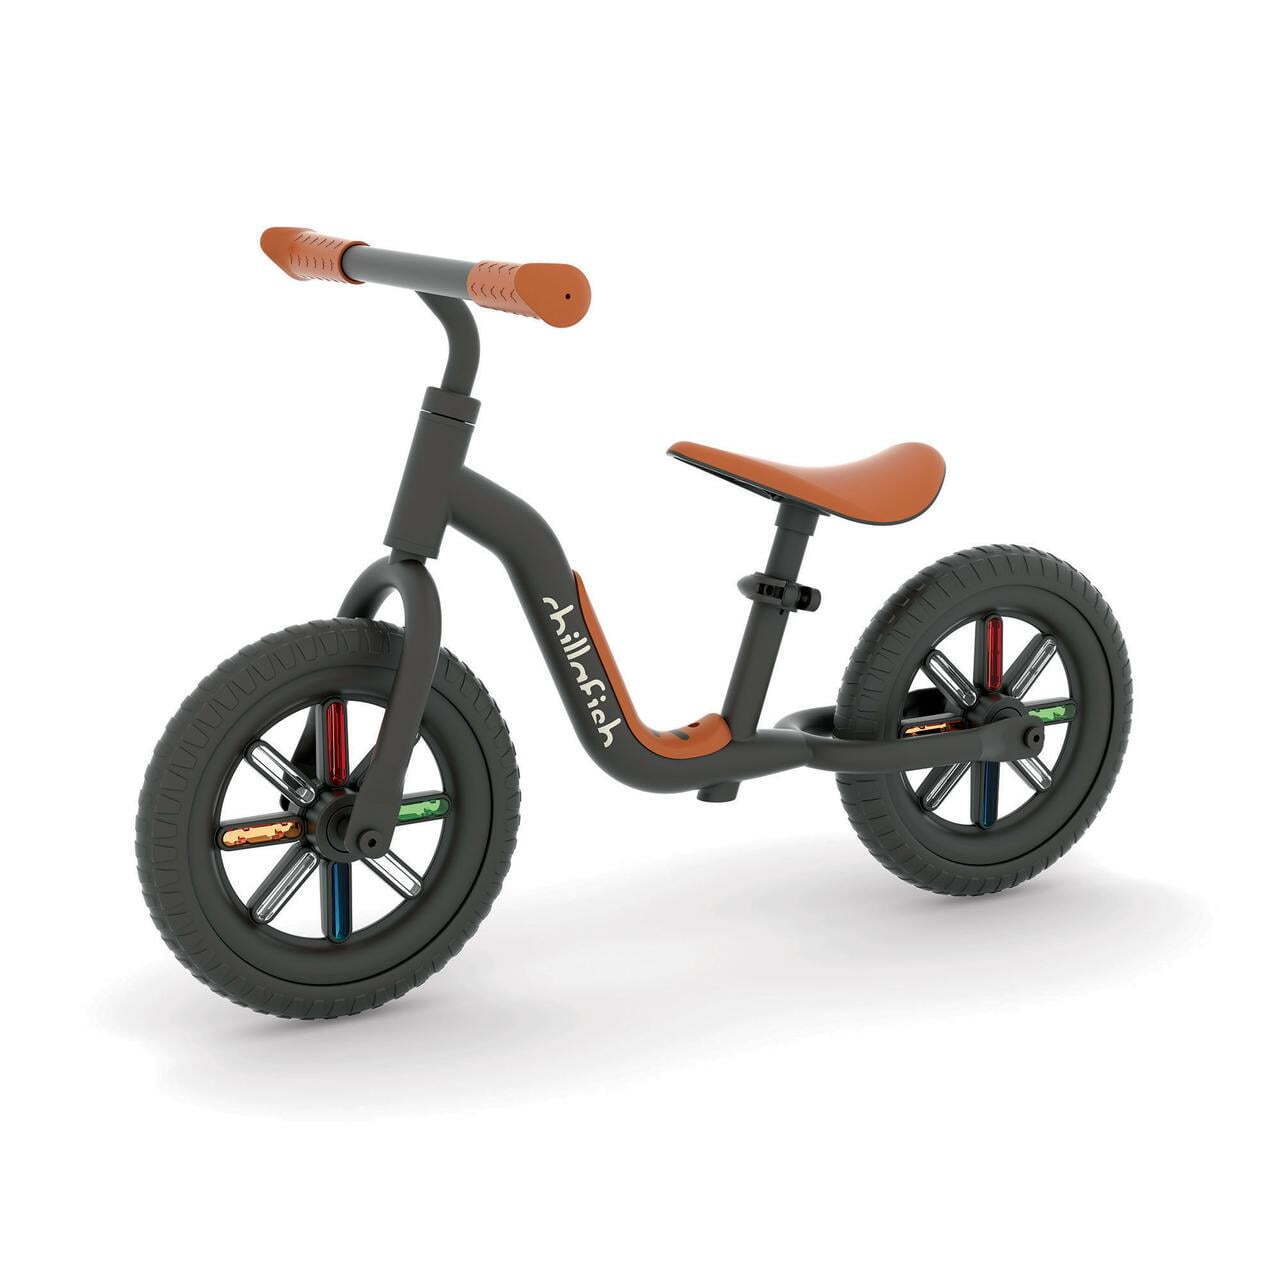 10' Balance Bike for Kids 5years and older, Lightweight Toddler Bike Adjustable